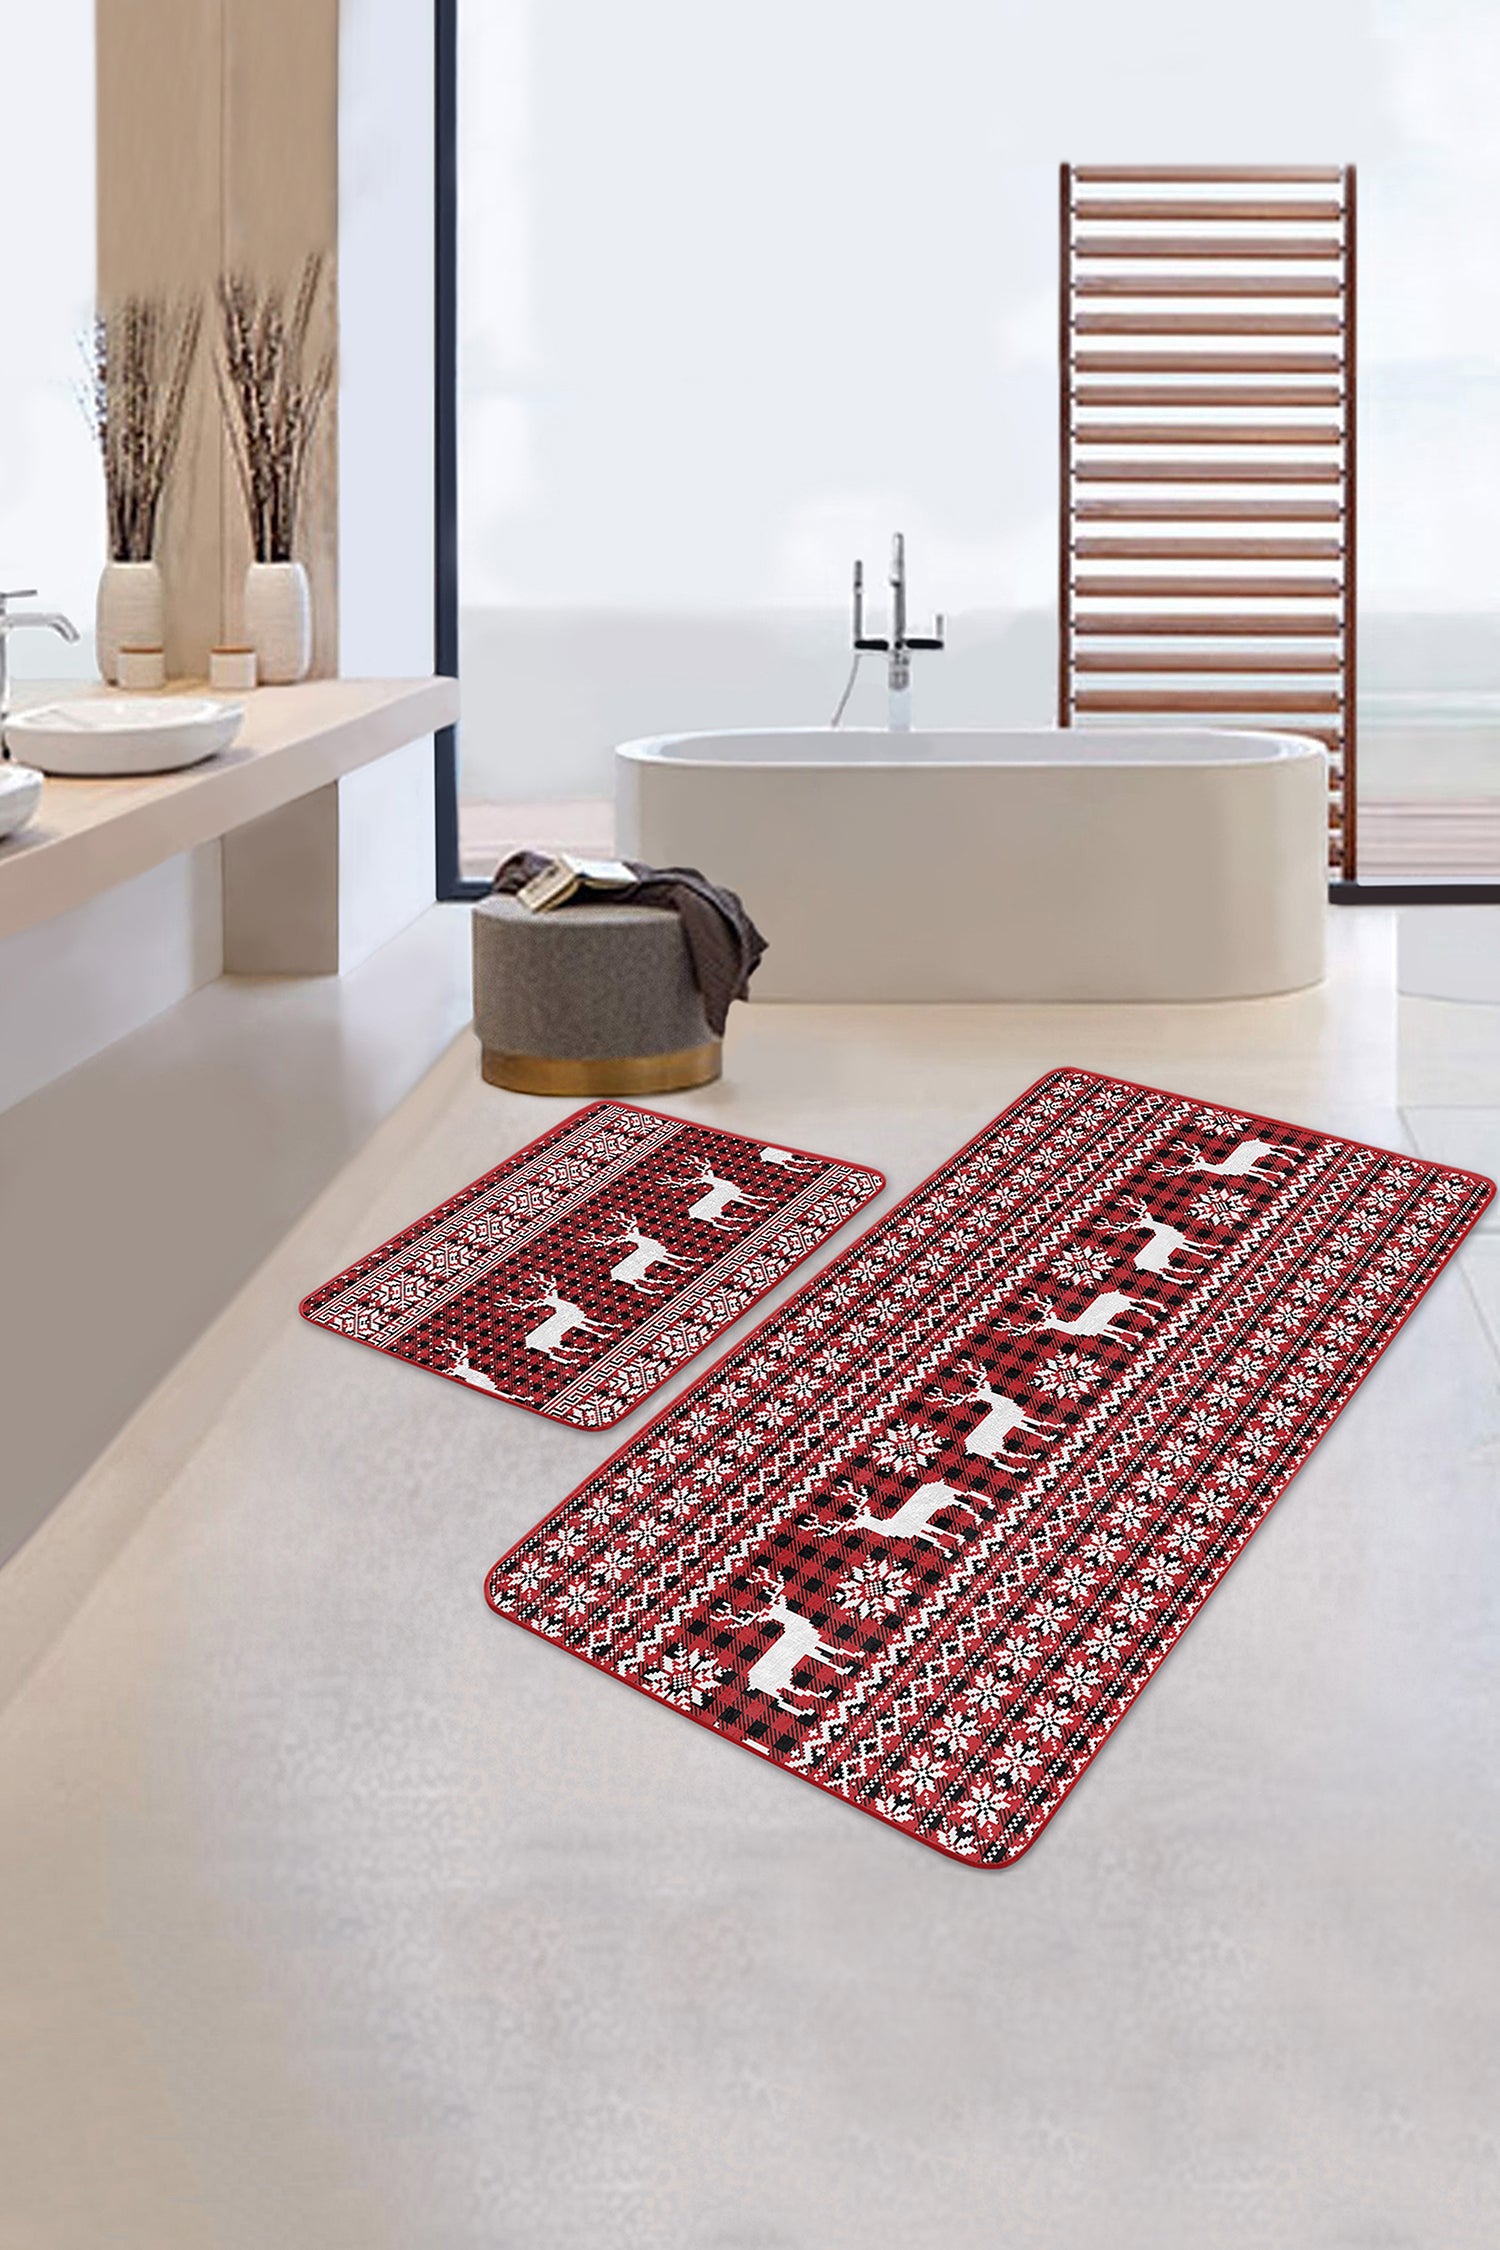 High-Quality Red Snowflake Pattern Bath Mat Set for Stylish Winter Decor